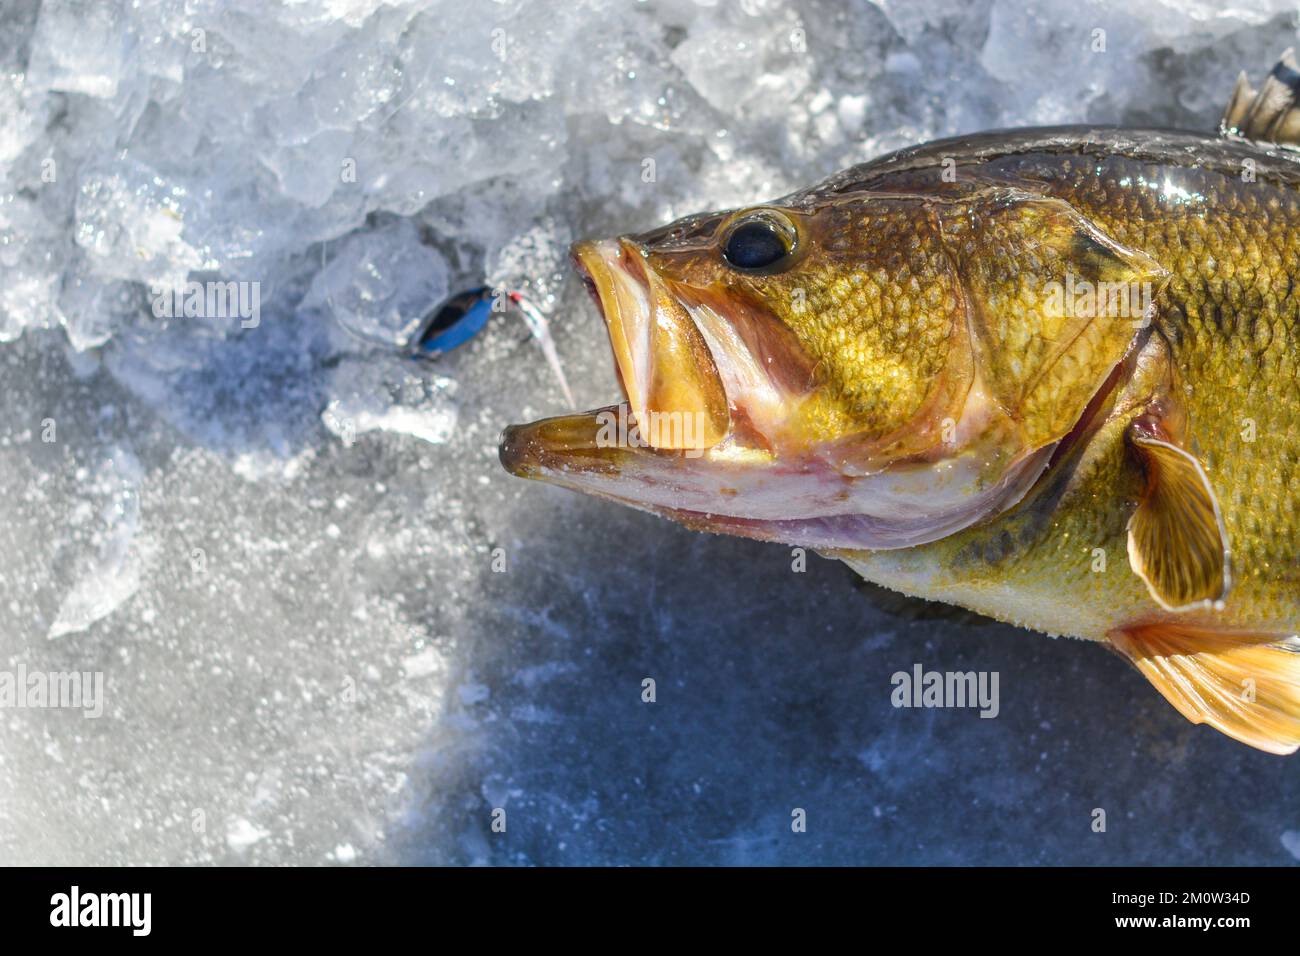 Ice fishing nice catch, winter activity, Ice hole fresh water lake. Stock Photo